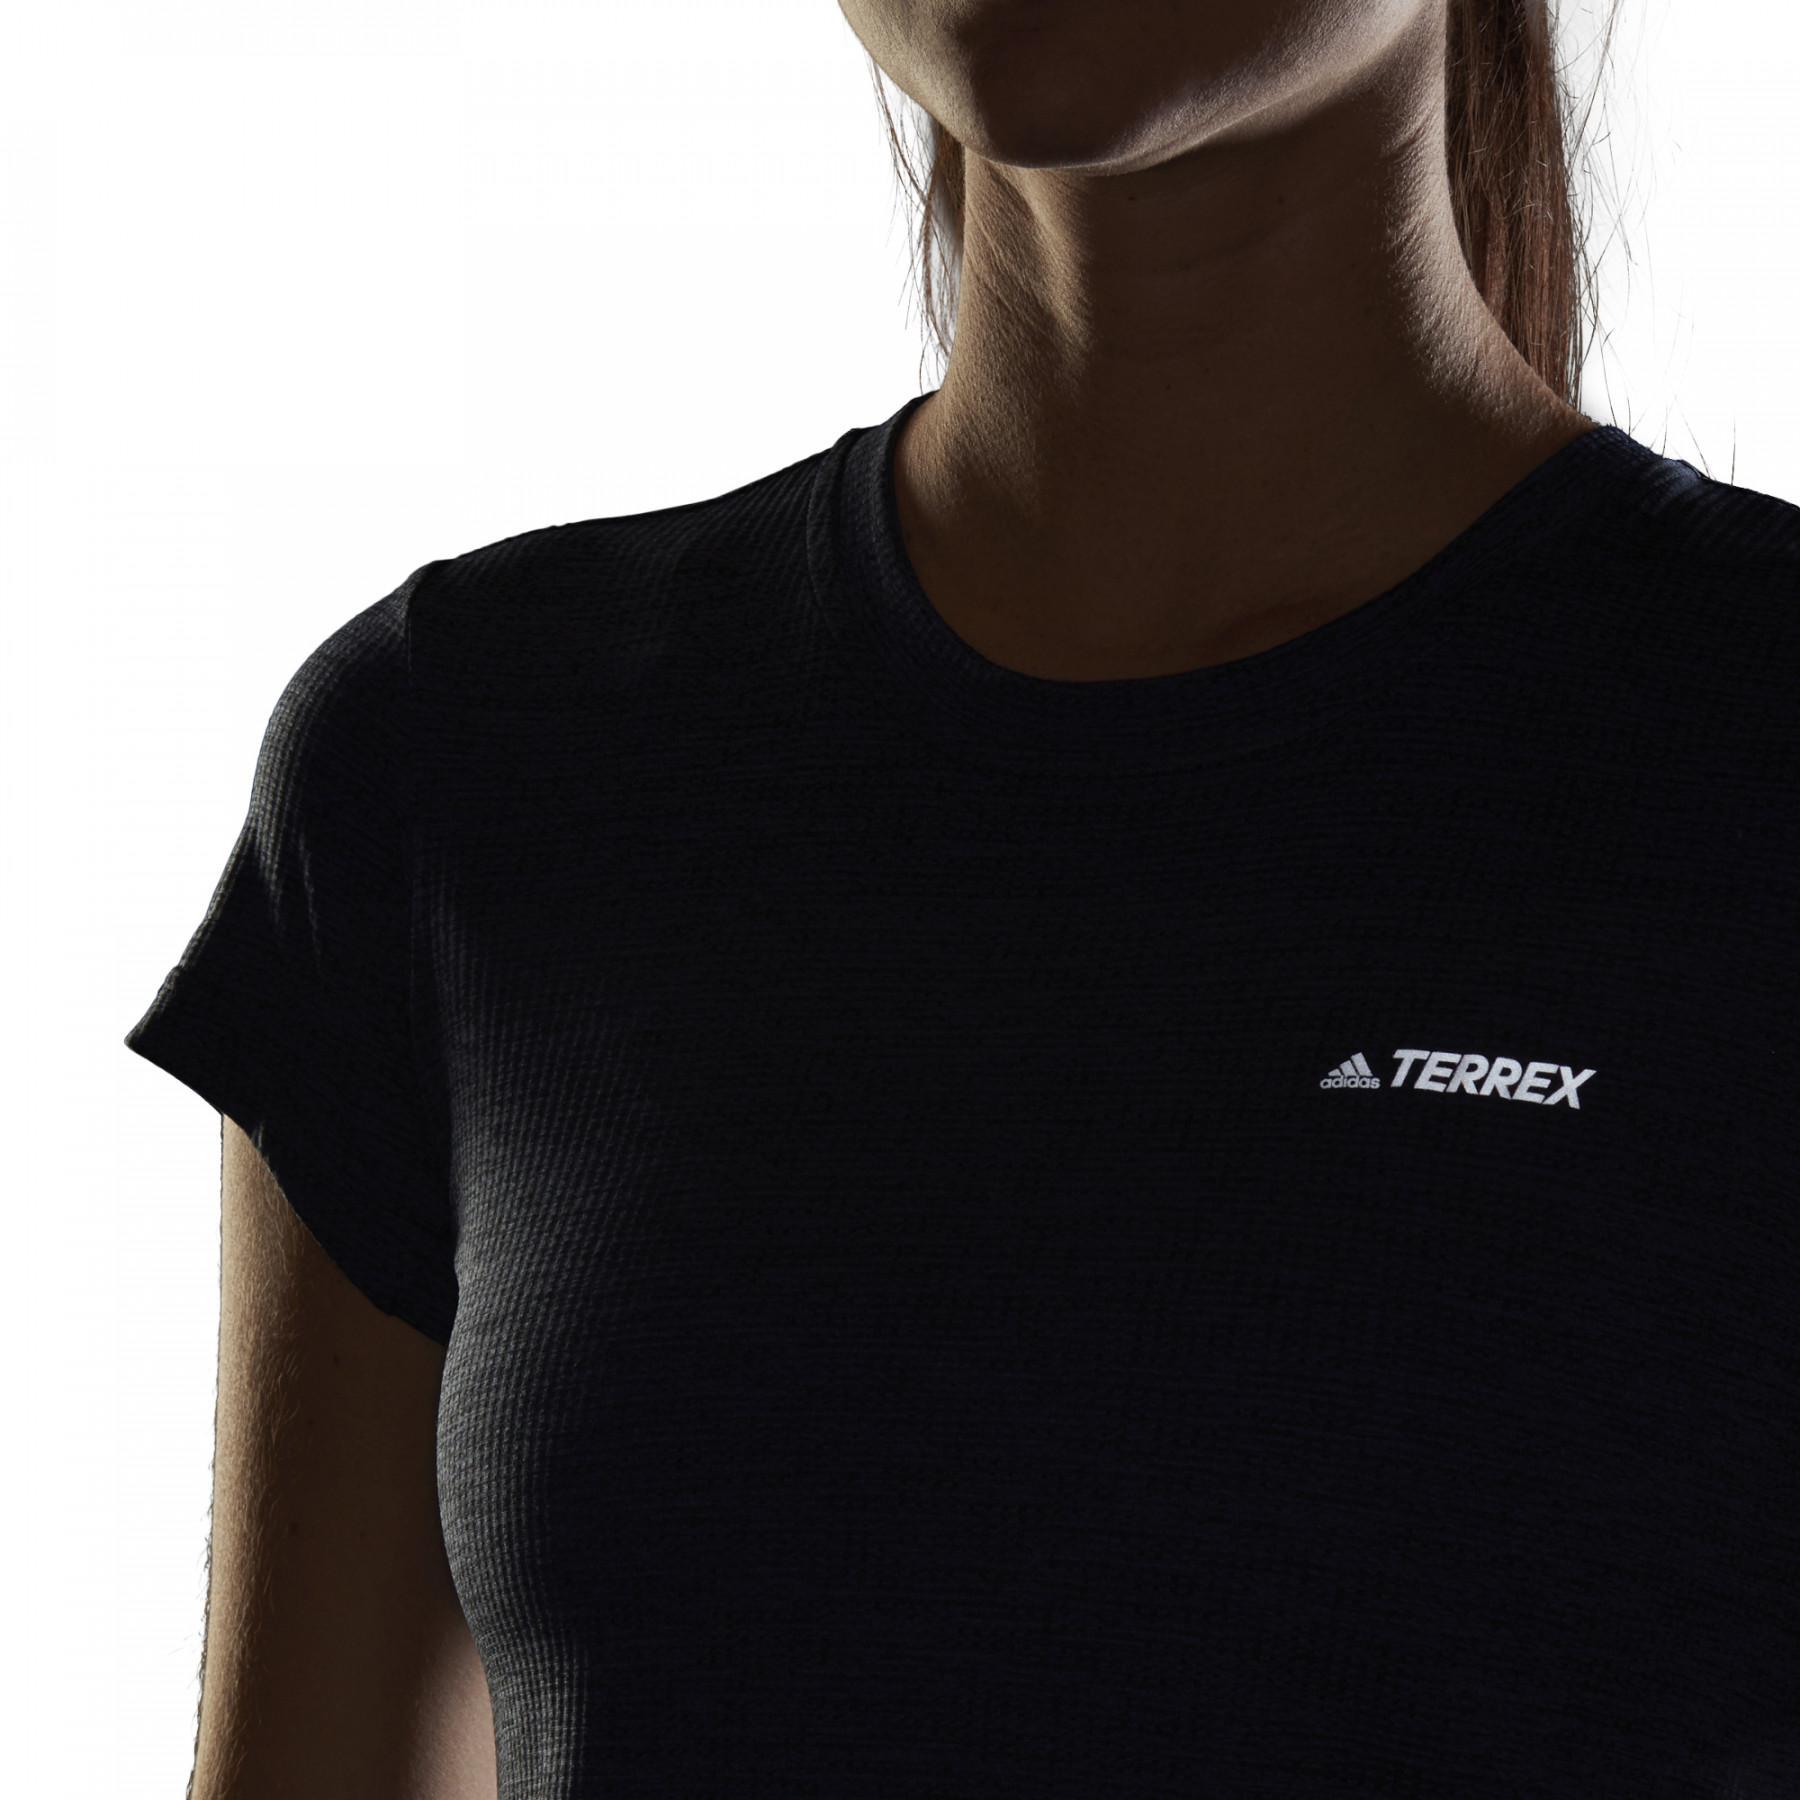 Frauen-T-Shirt adidas Tivid